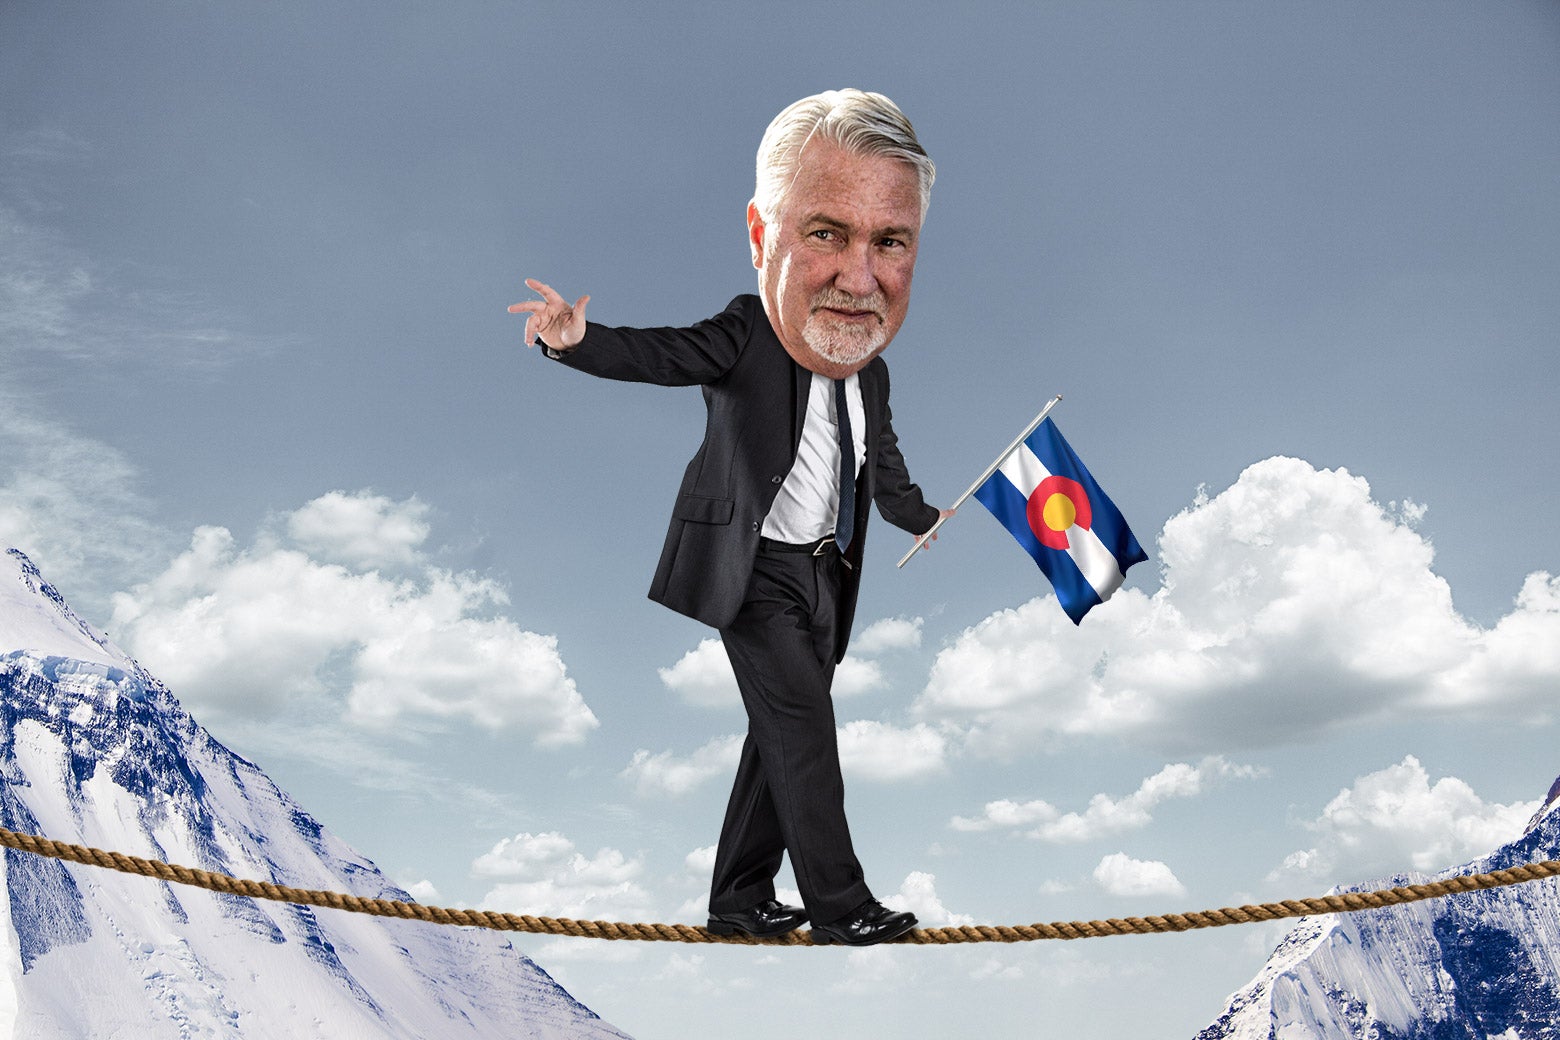 An illustration of Joe O'Dea walking on a tightrope between mountains, holding a Colorado flag.